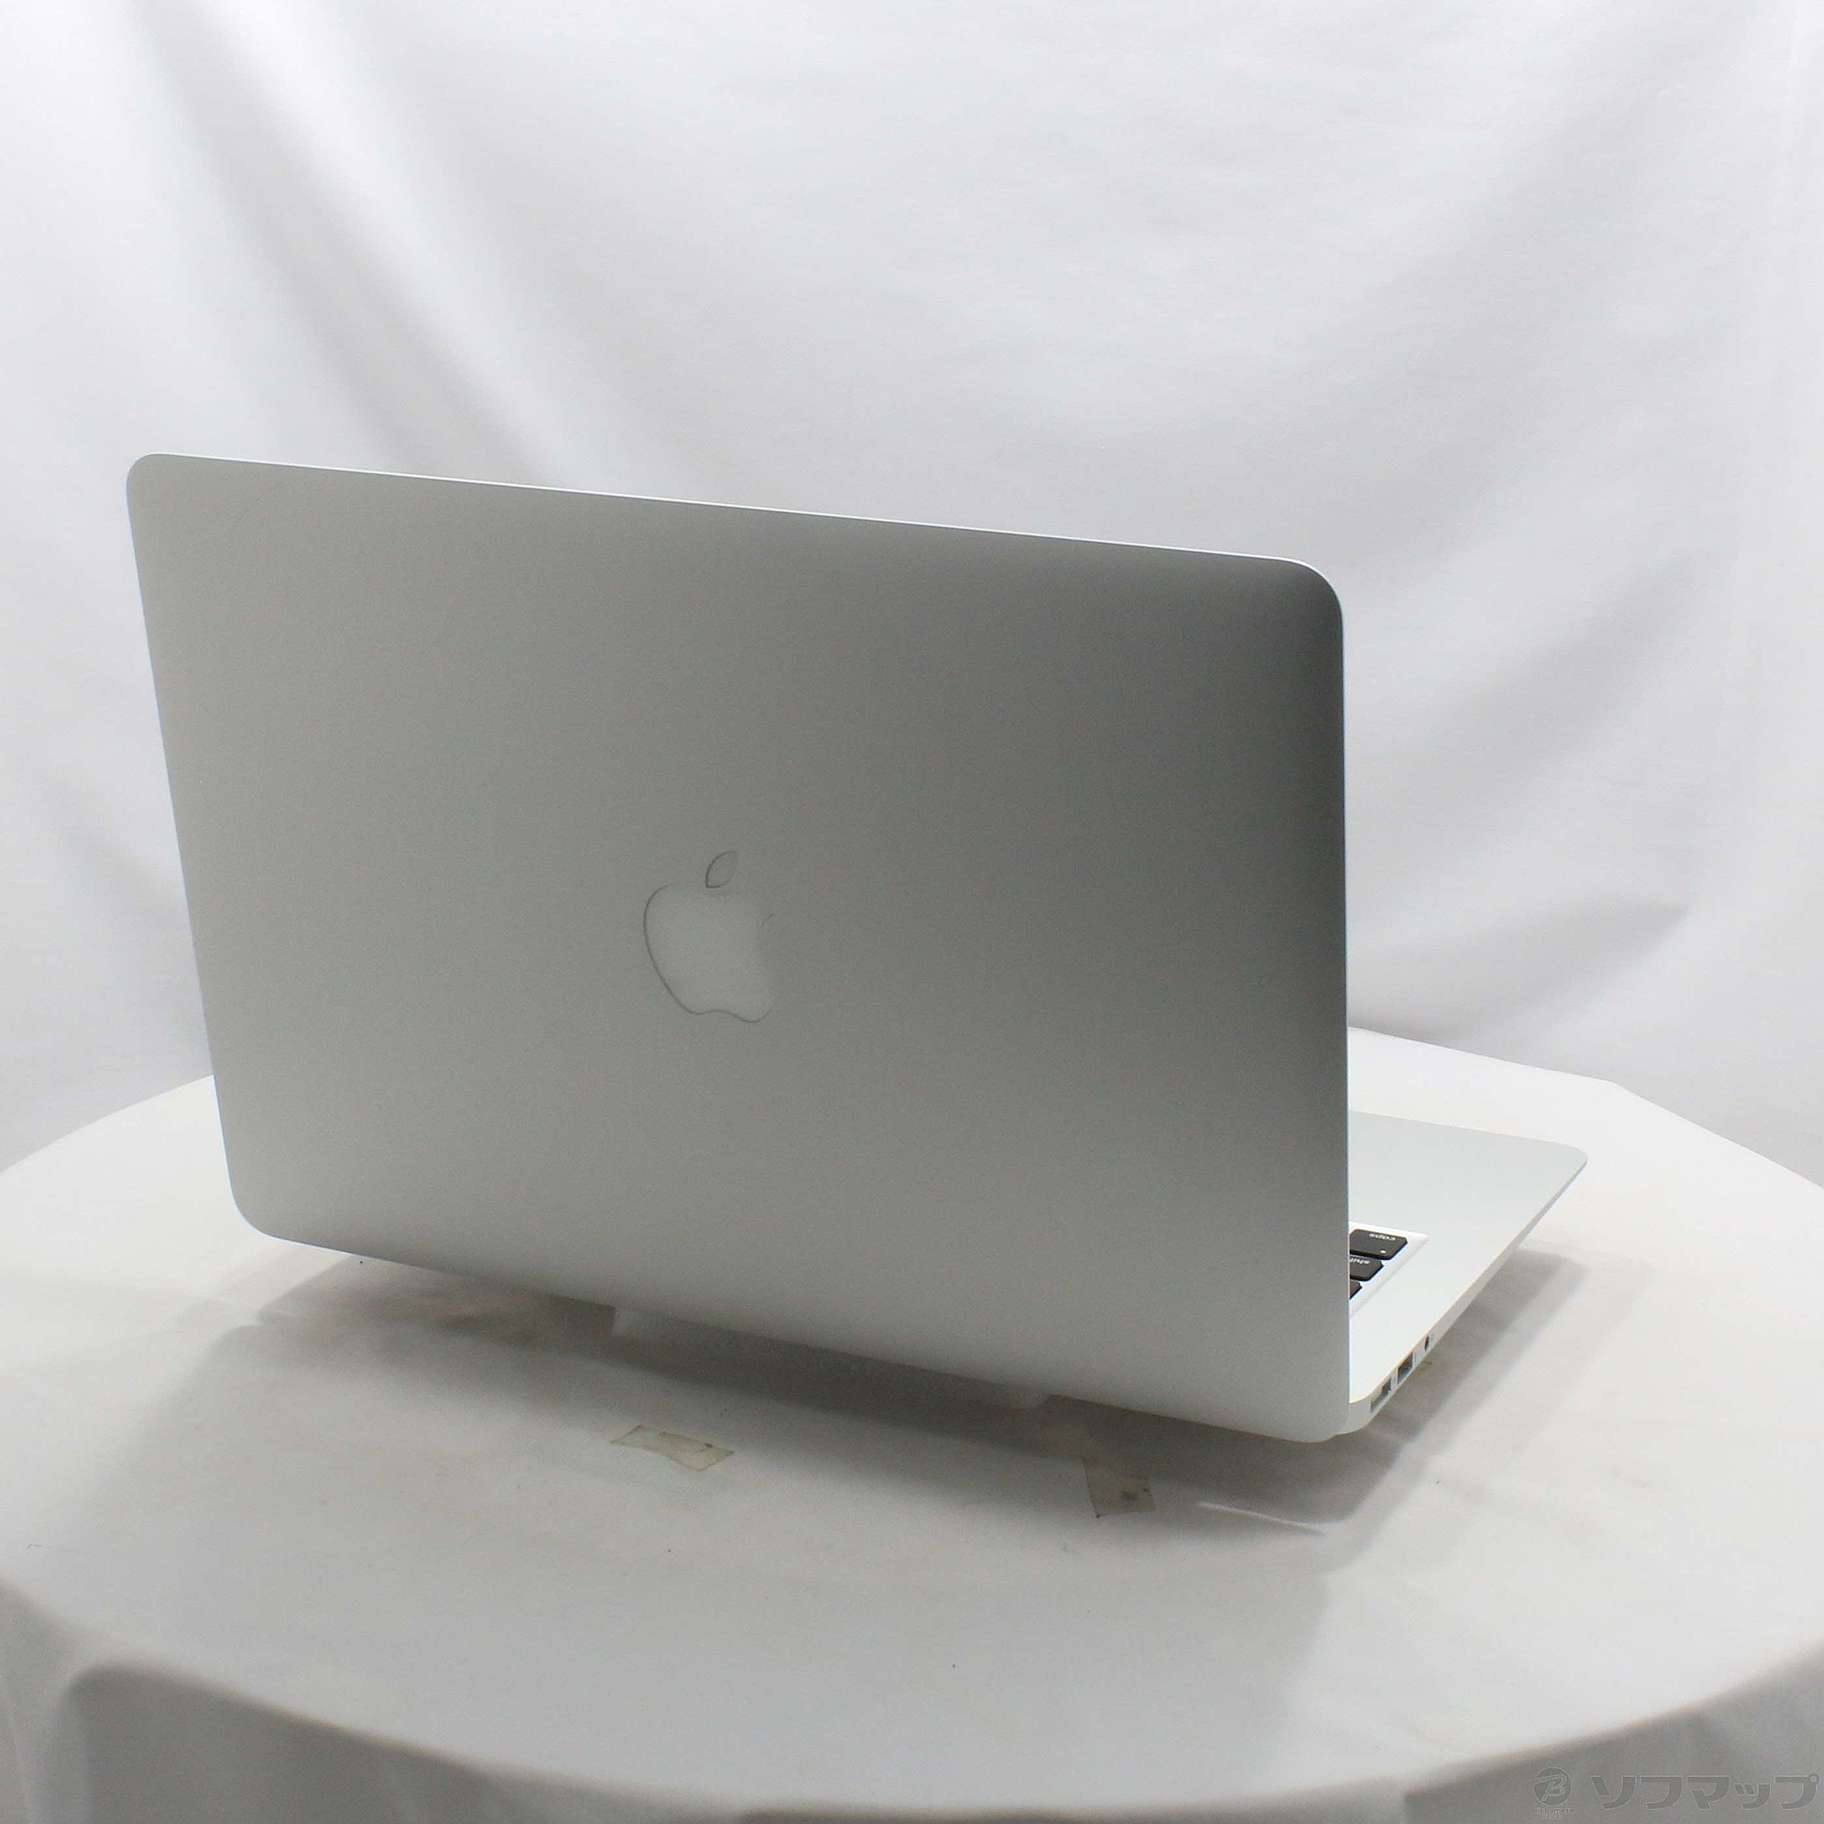 中古】MacBook Air 13.3-inch Mid 2017 MQD32J／A Core_i5 1.8GHz 8GB